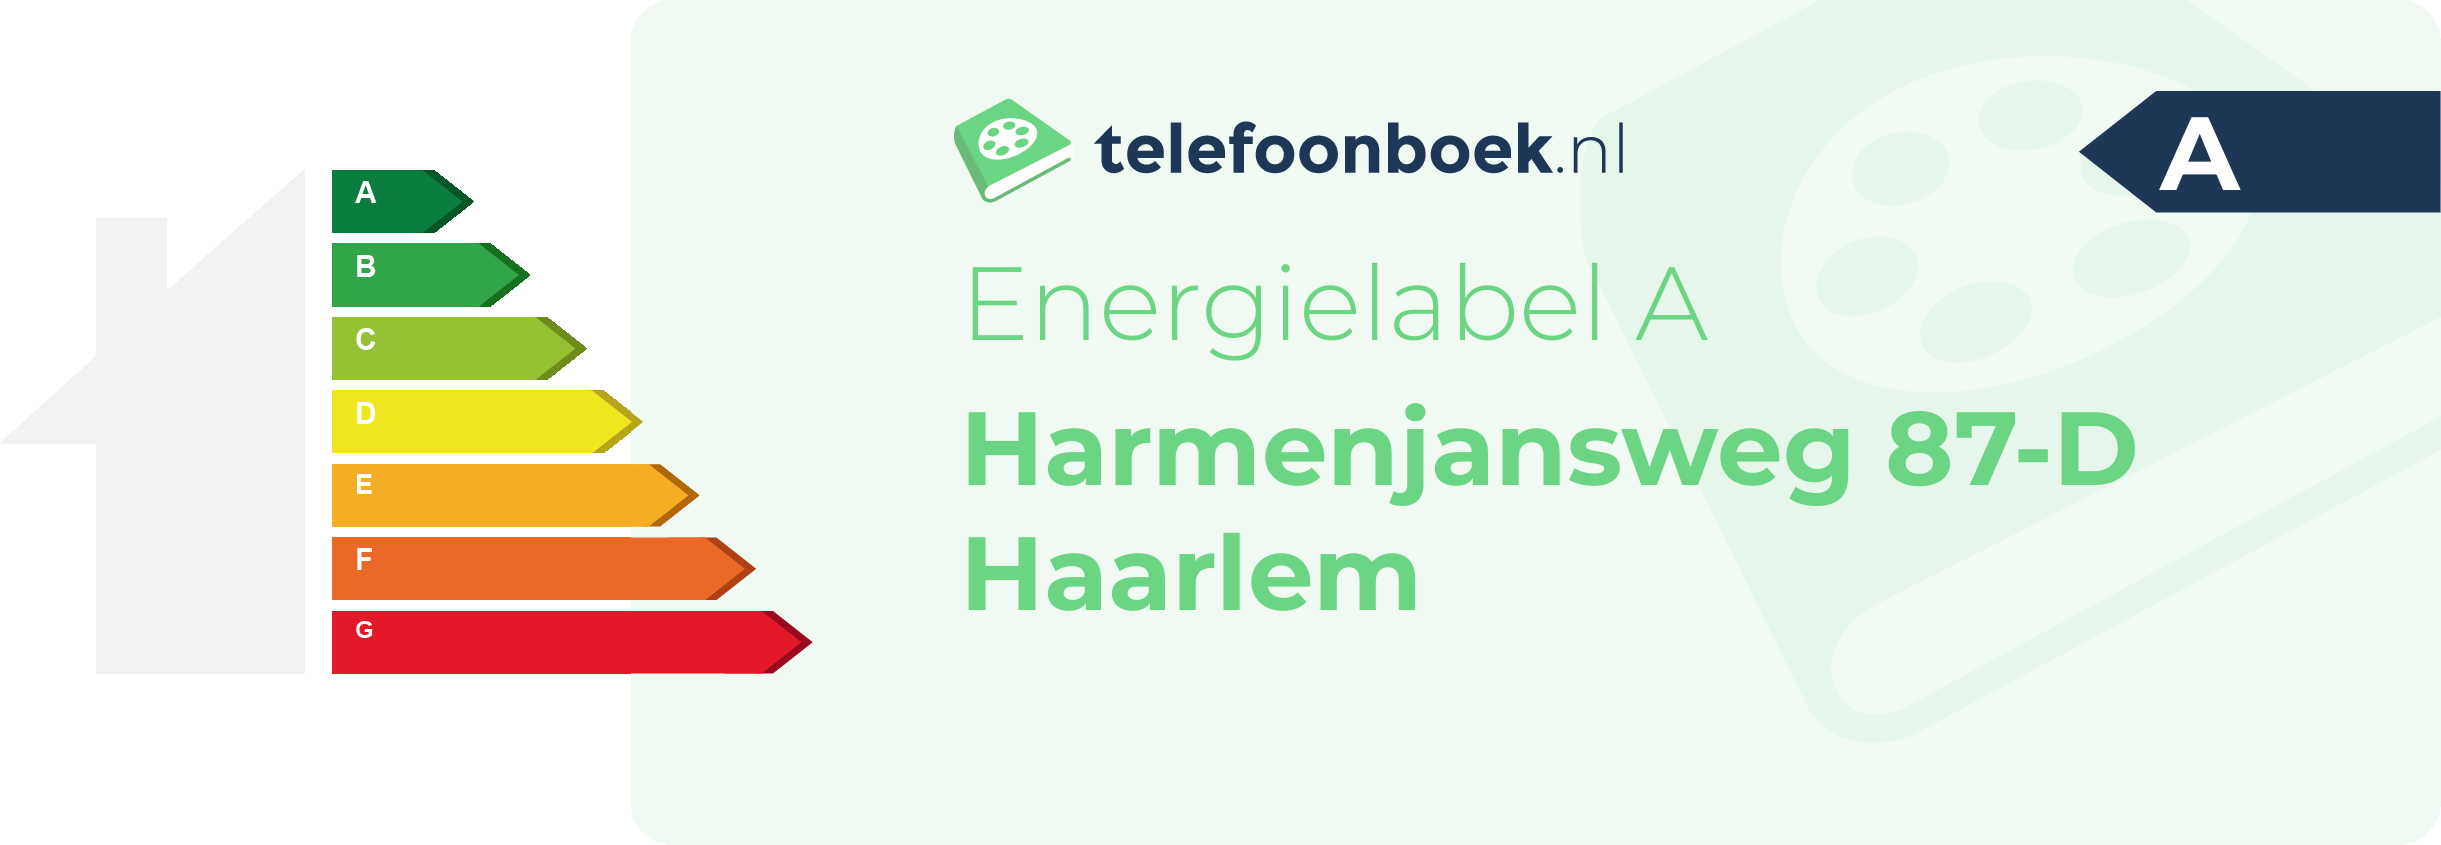 Energielabel Harmenjansweg 87-D Haarlem